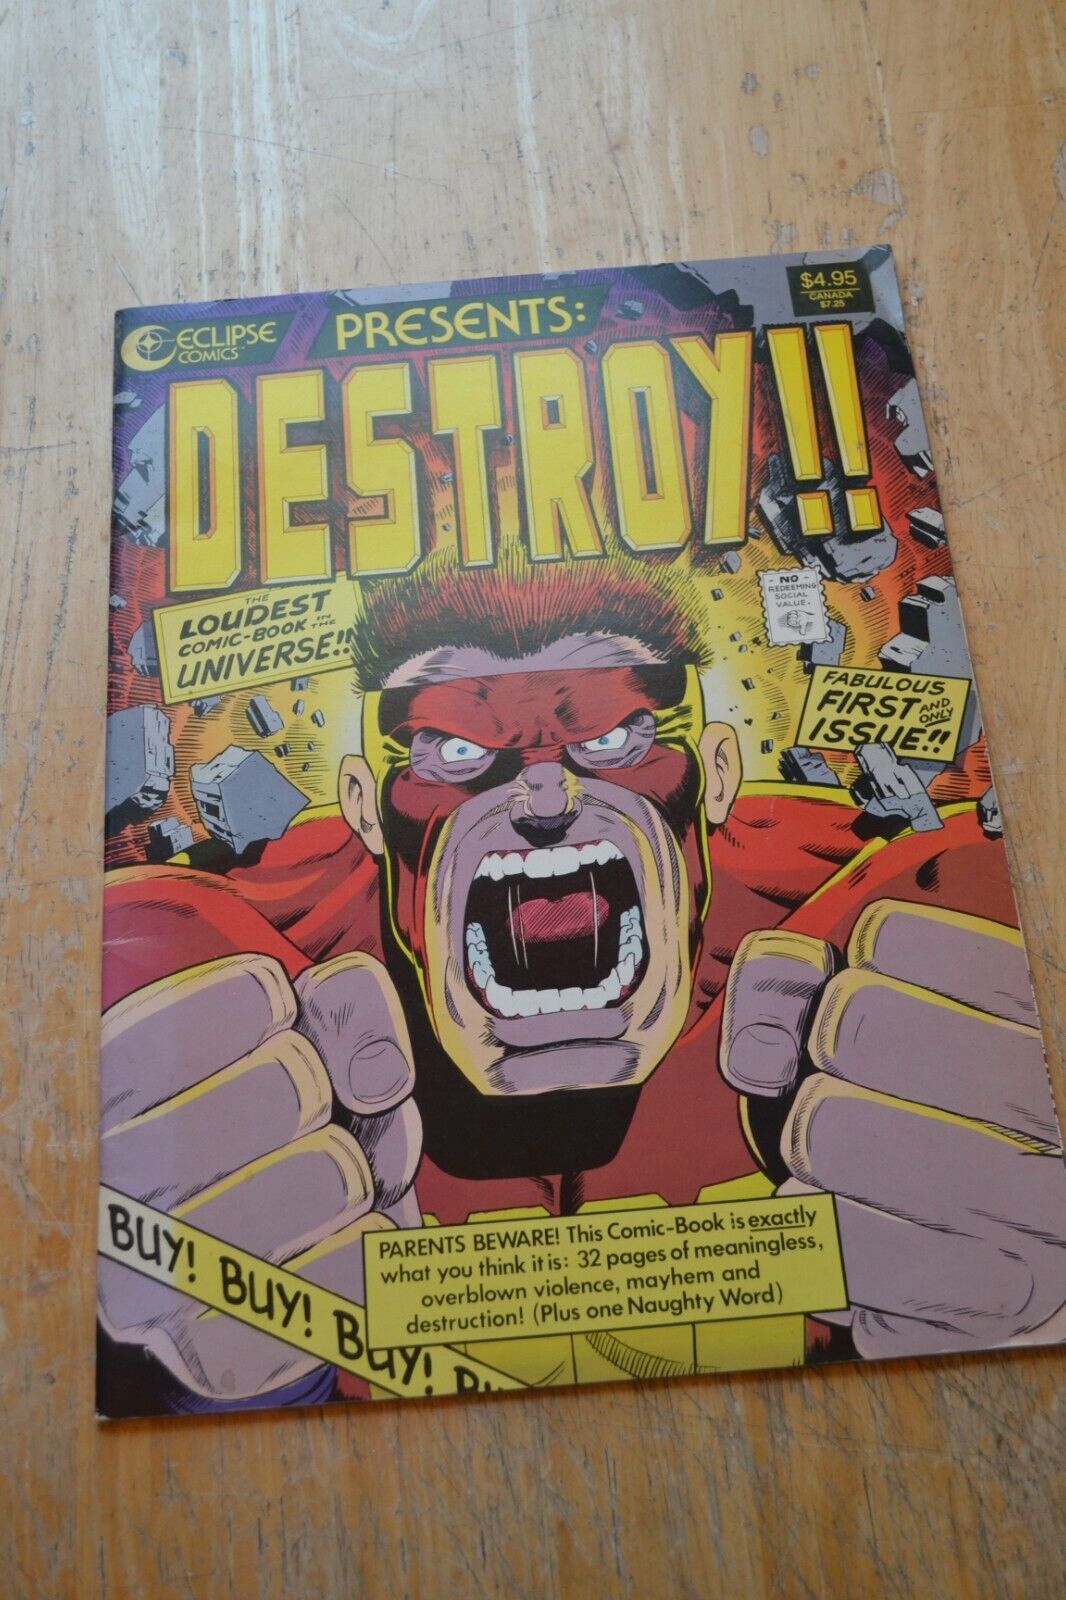 Eclipse Comics Presents DESTROY The Loudest Comic-Book in the Universe